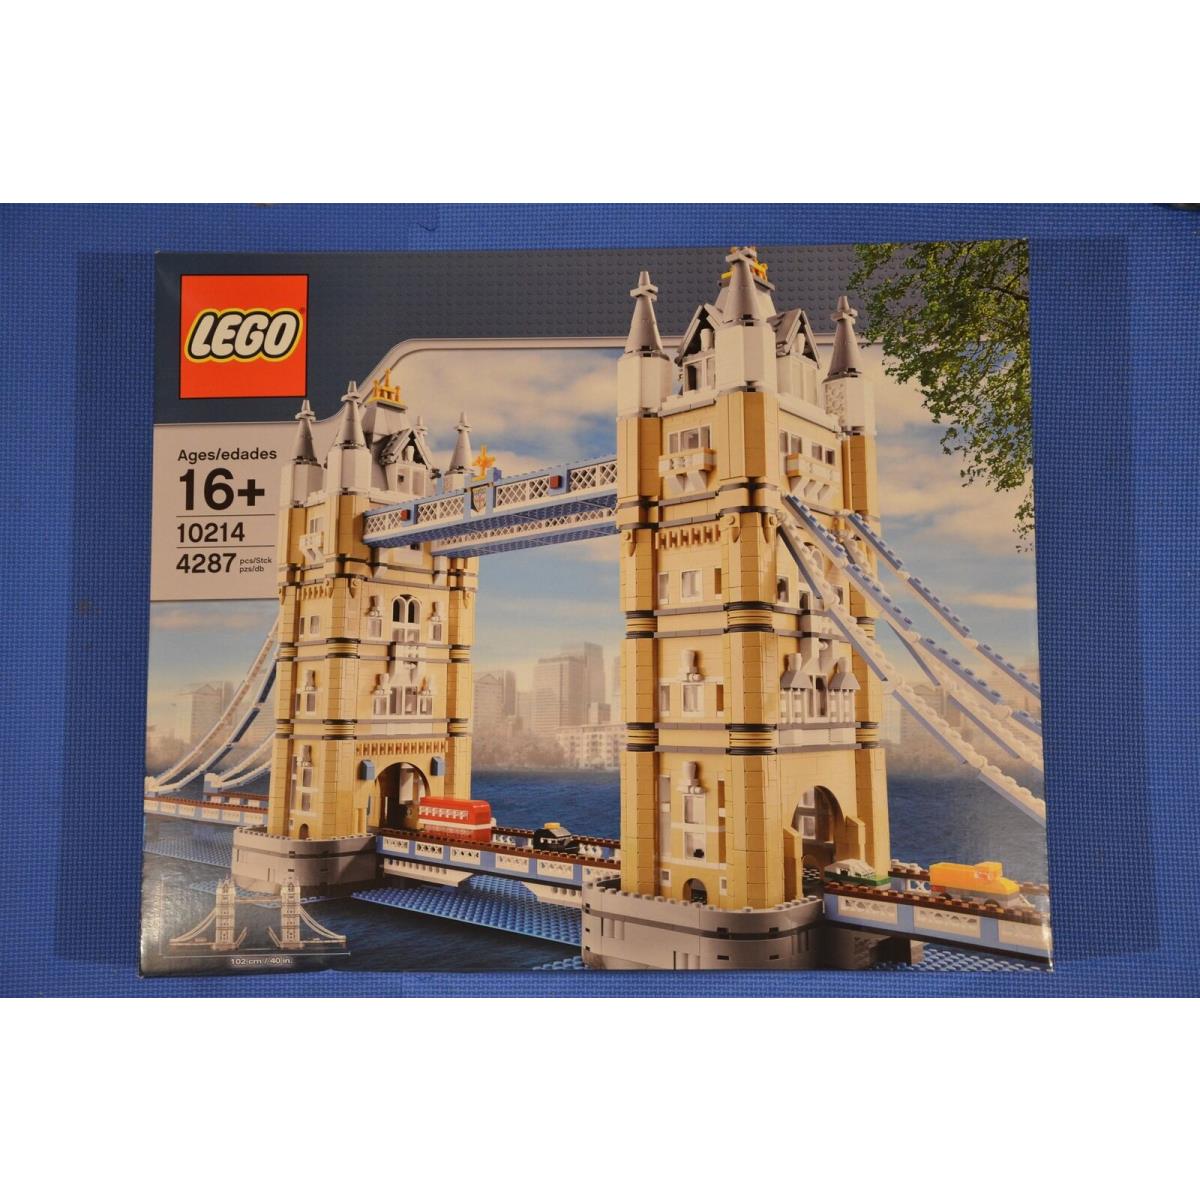 Lego 10214 Creator Tower Bridge Set